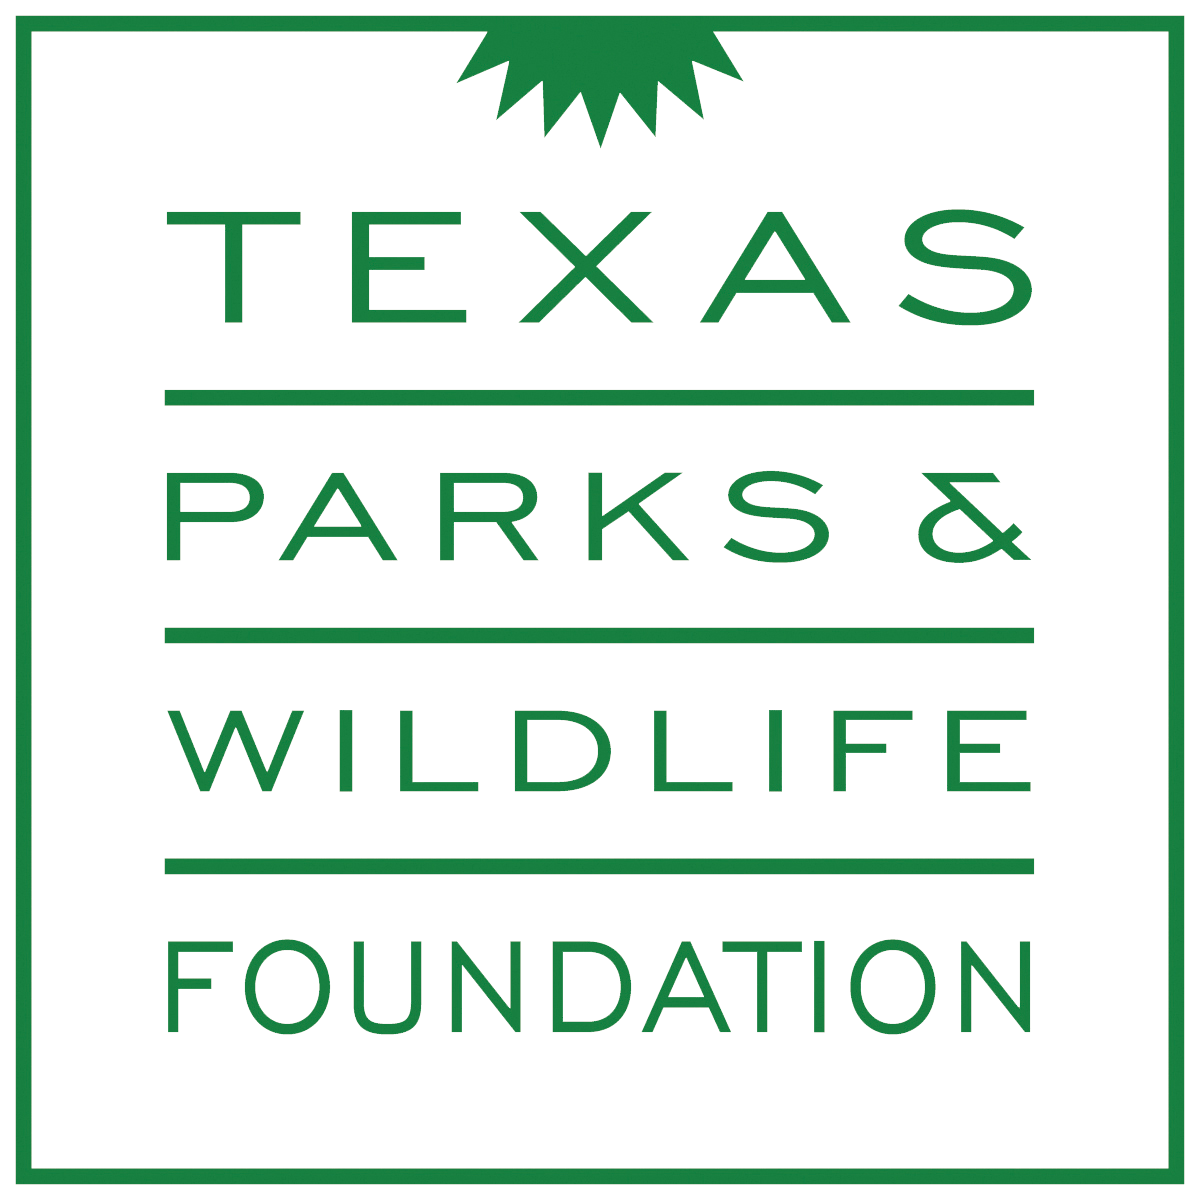 Texas Parks & Wildlife Foundation